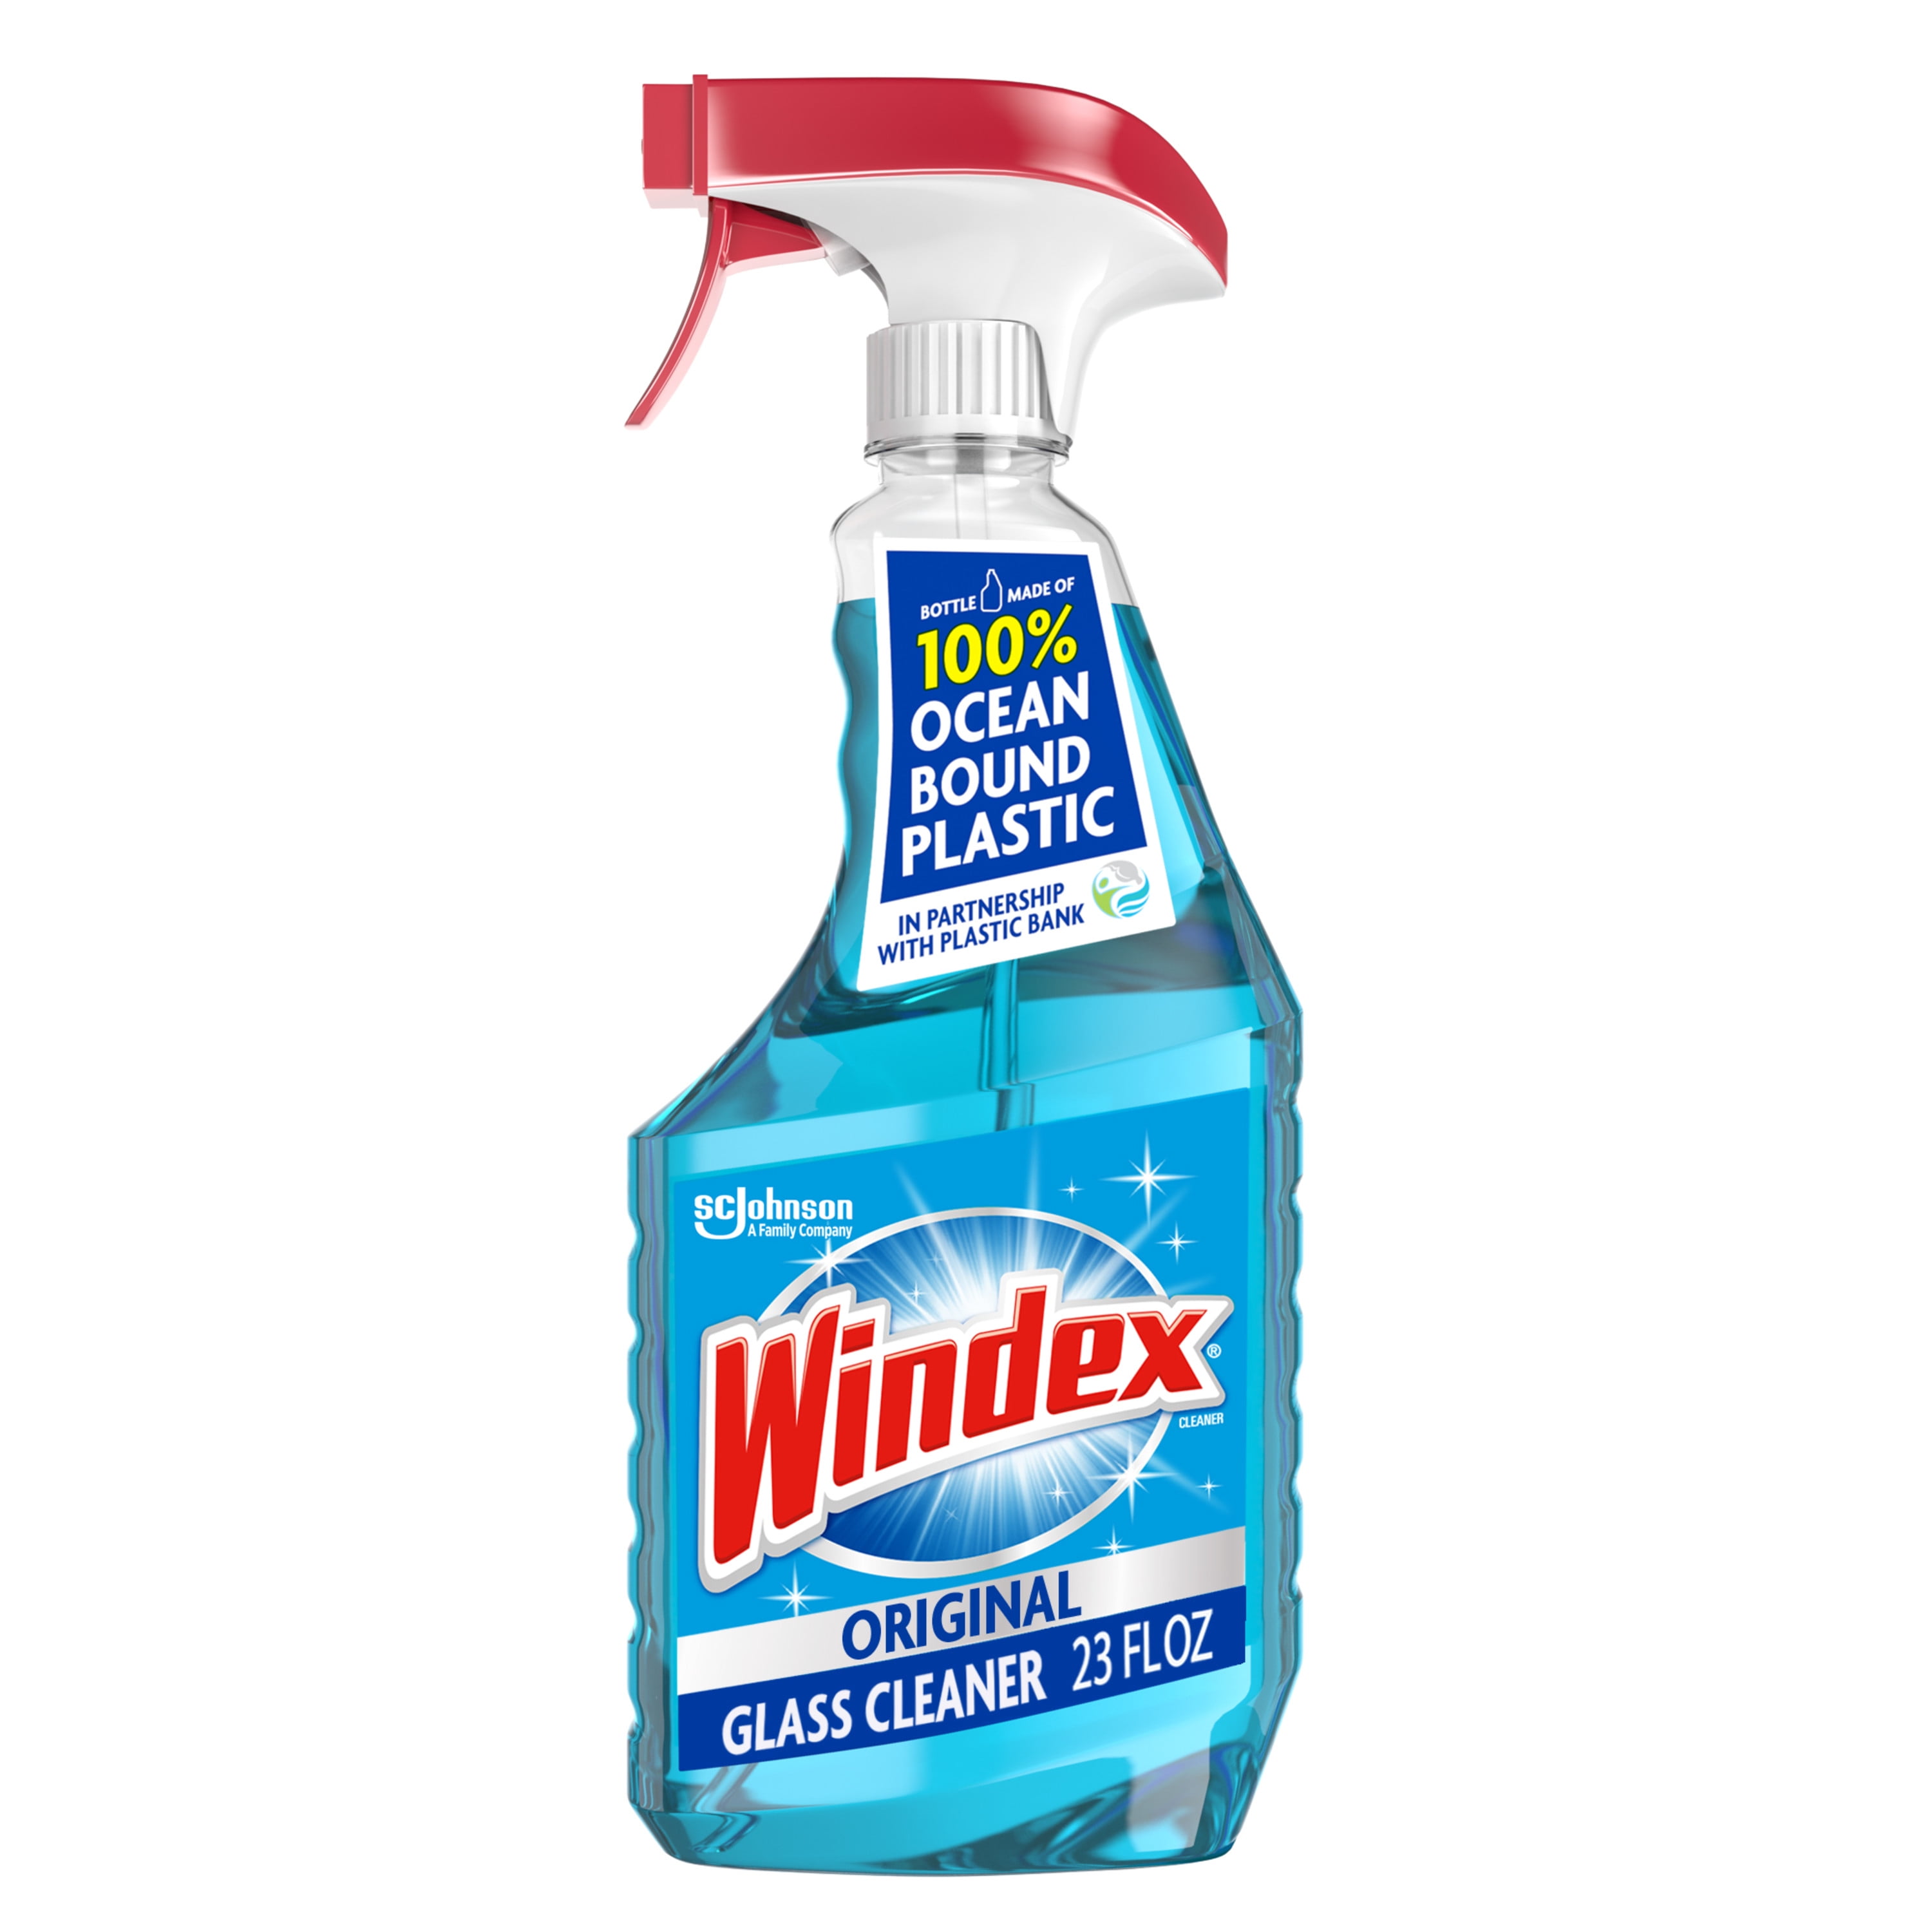 Windex Glass Cleaner, Original Blue, Spray Bottle, 23 fl oz - Walmart.com.